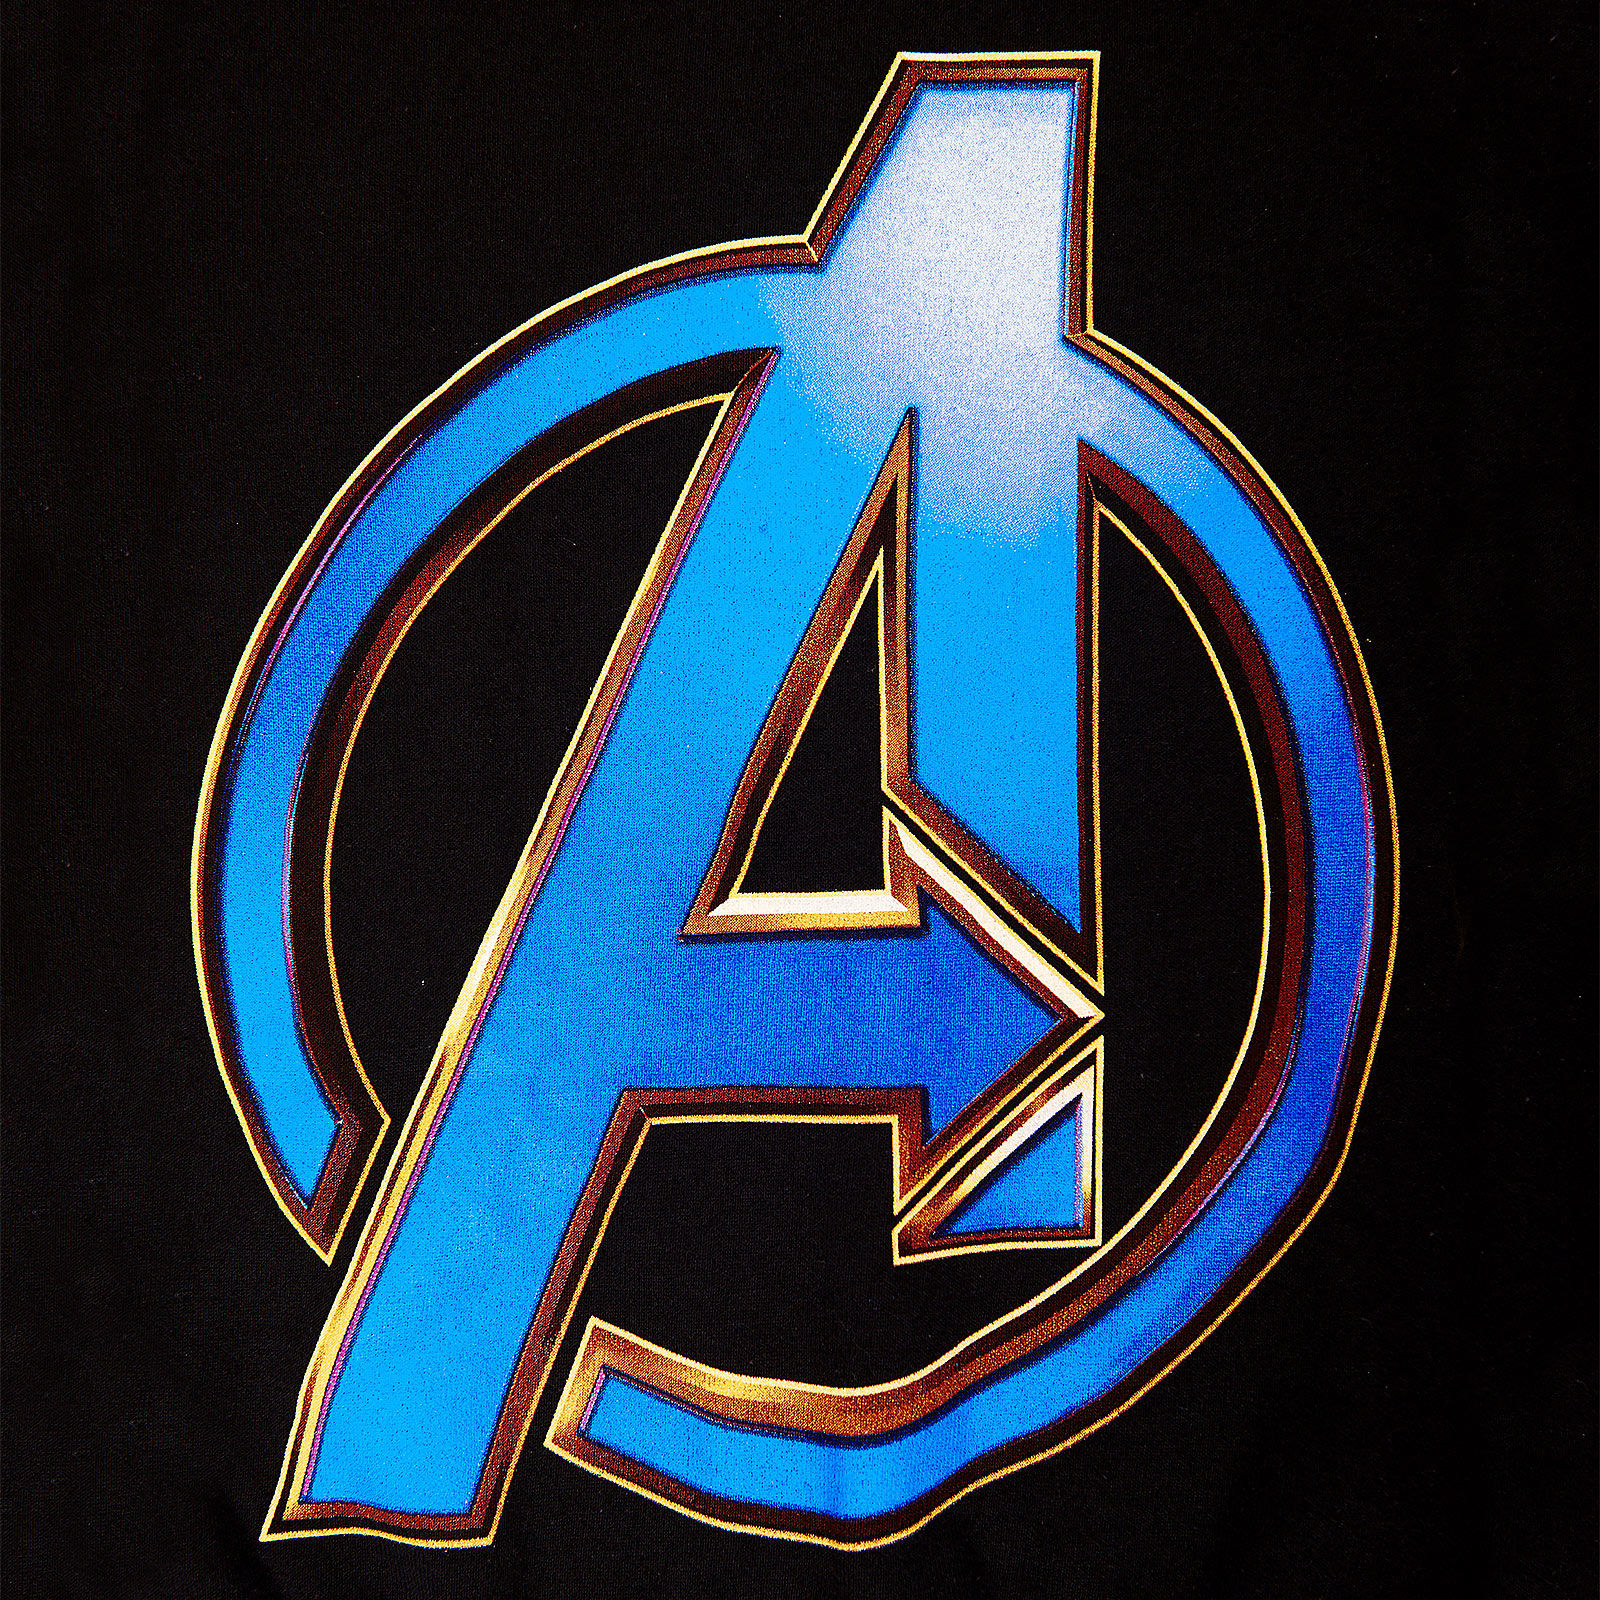 Avengers - Endgame Logo Hoodie Black